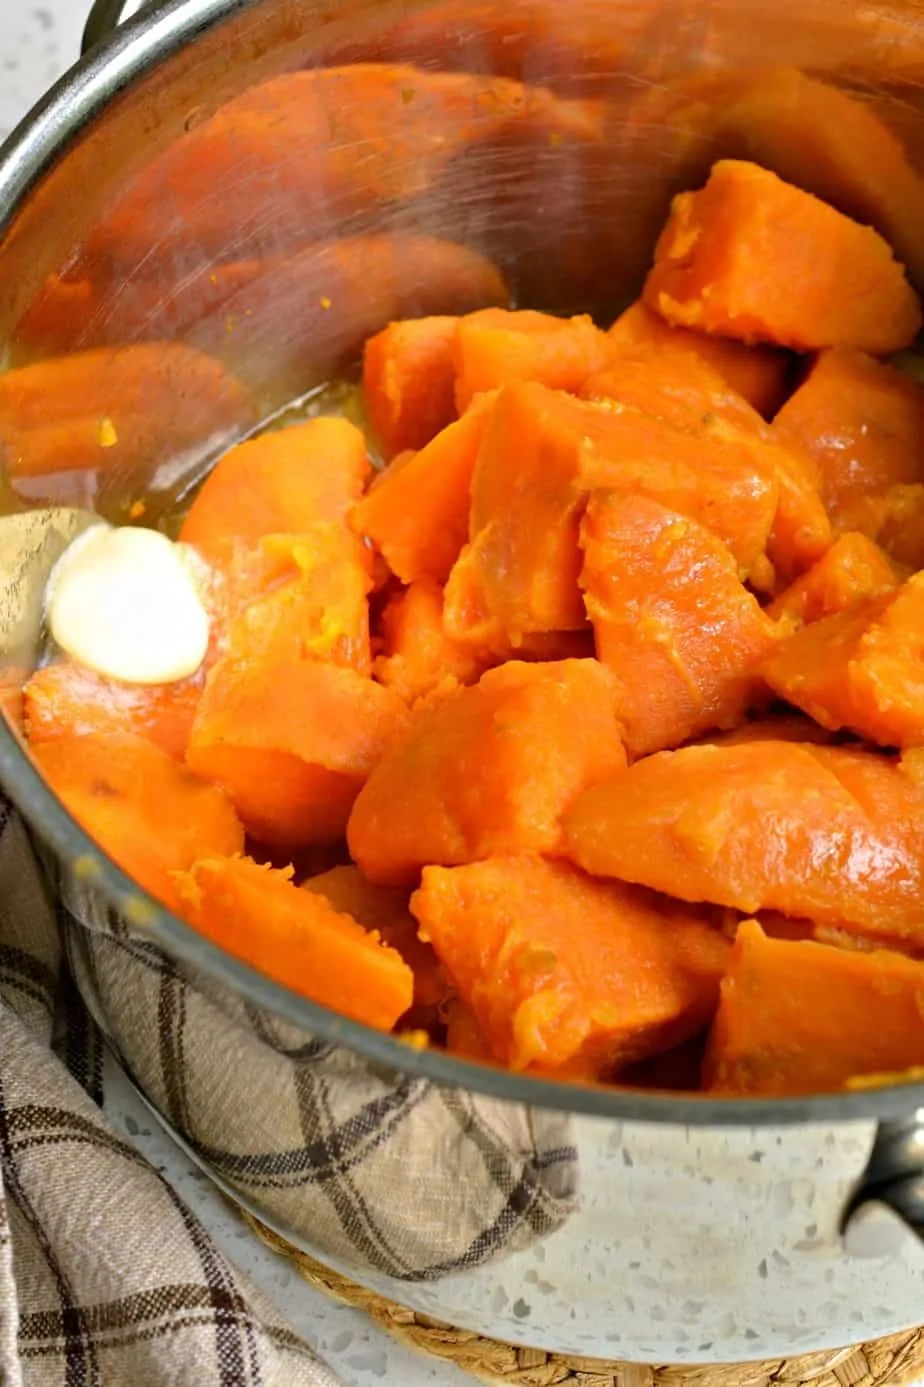 How to make Mashed Sweet Potatoes